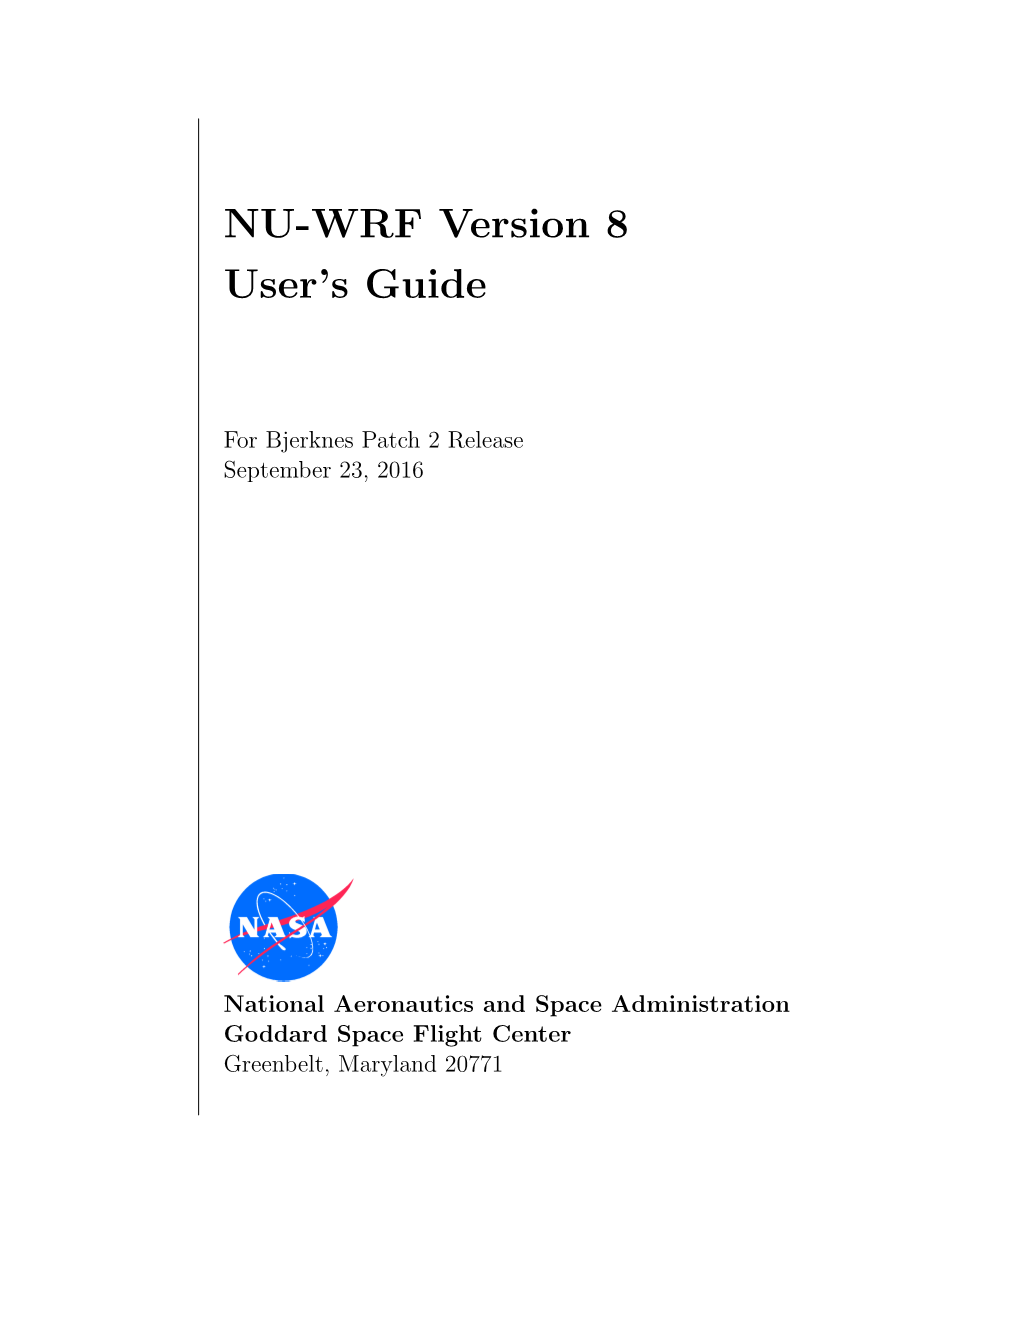 NU-WRF Version 8 User's Guide